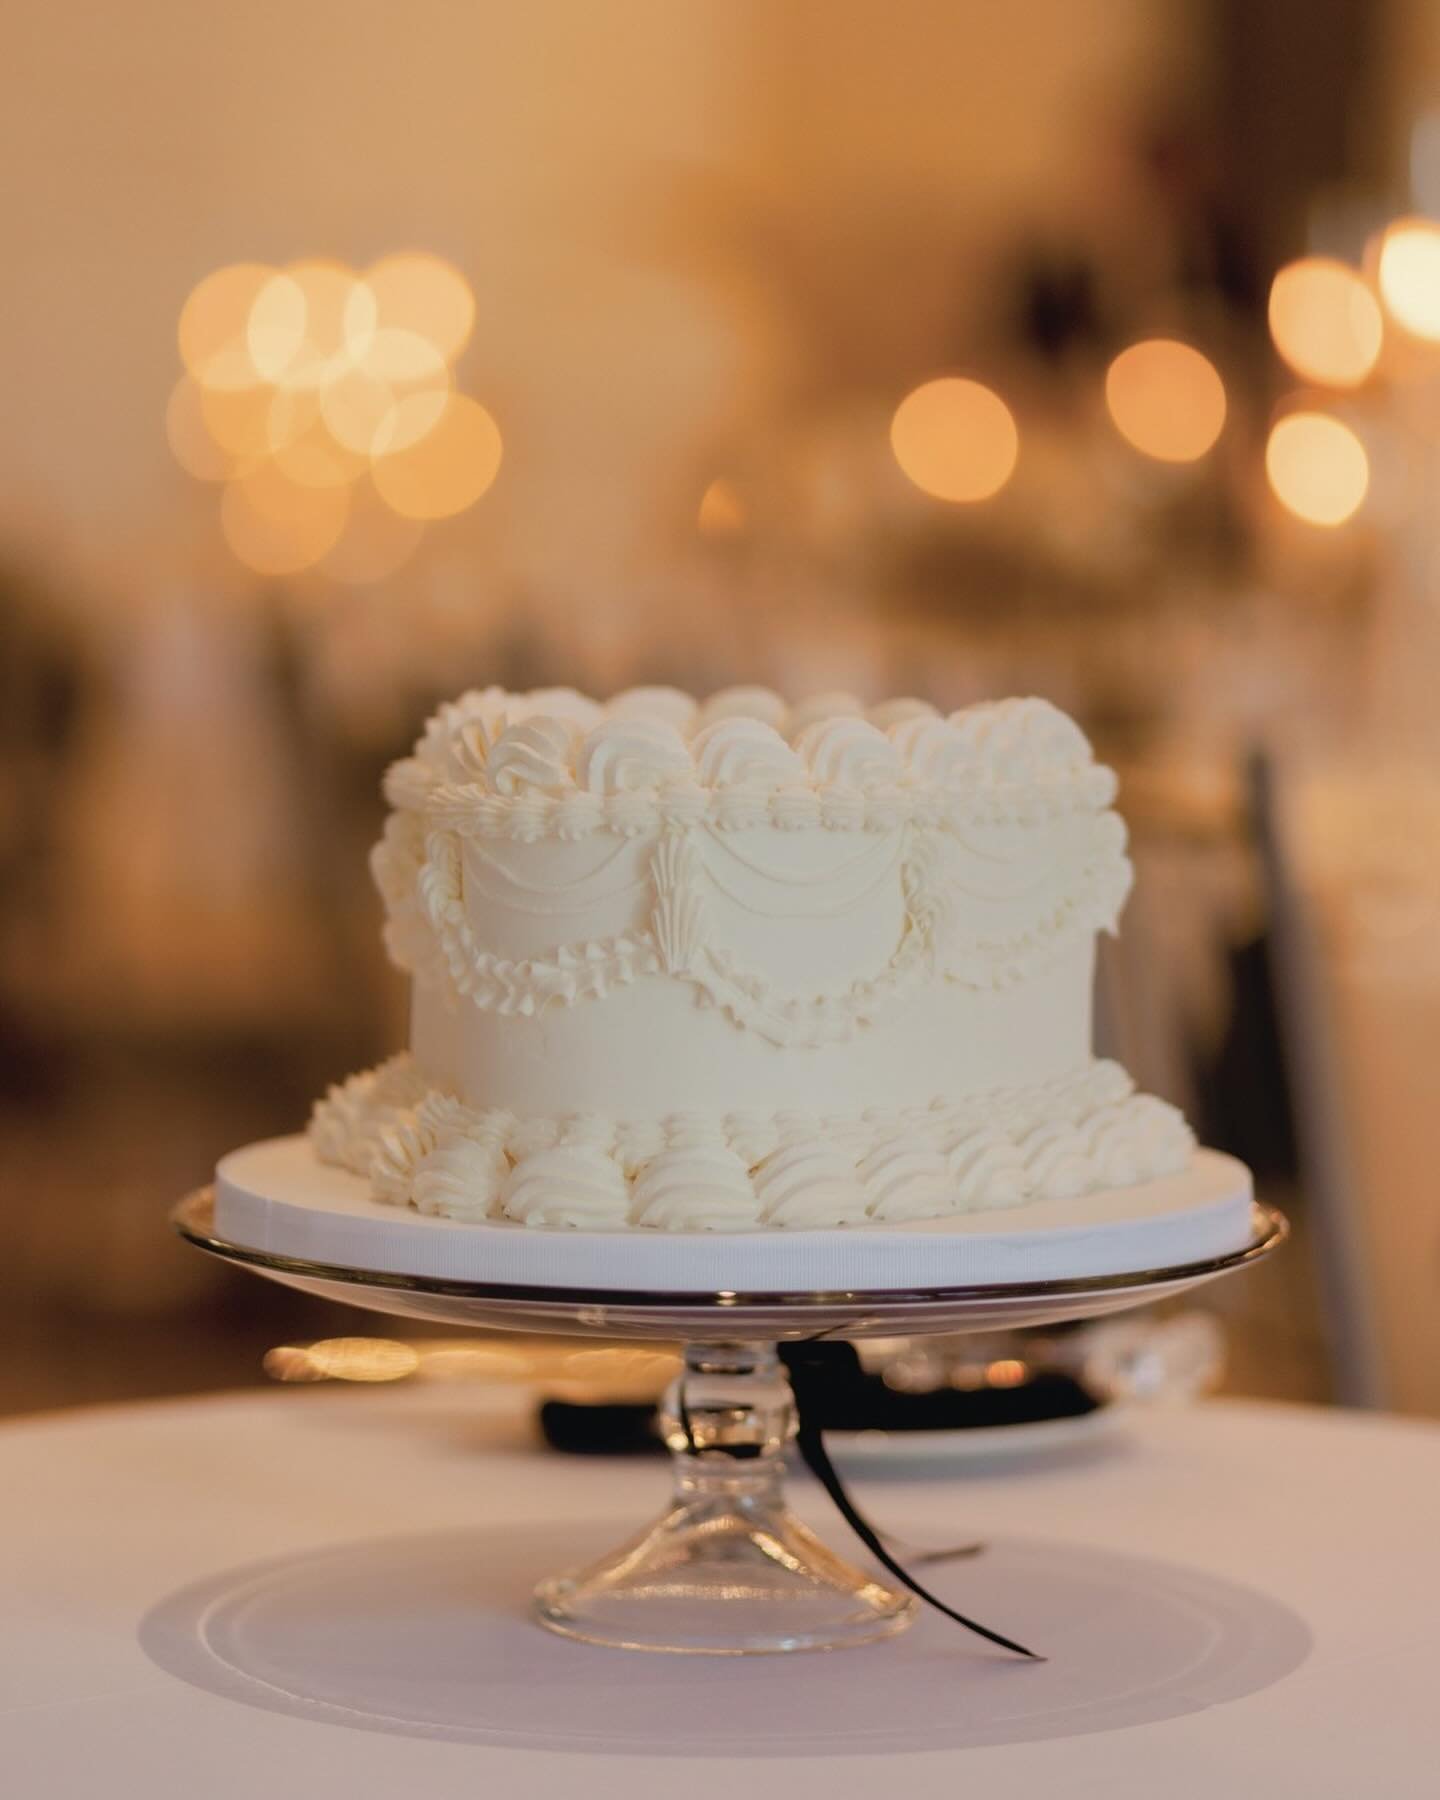 Vintage cakes, it was always you 💫 
 
#vintagecake #cake #weddingcake #cakedesign #weddingdetails #wedding #weddinginspiration #weddingsideas #modernwedding #luxurywedding #realwedding #weddingtrends #stmaryson #stmarysballroom #dreamwedding